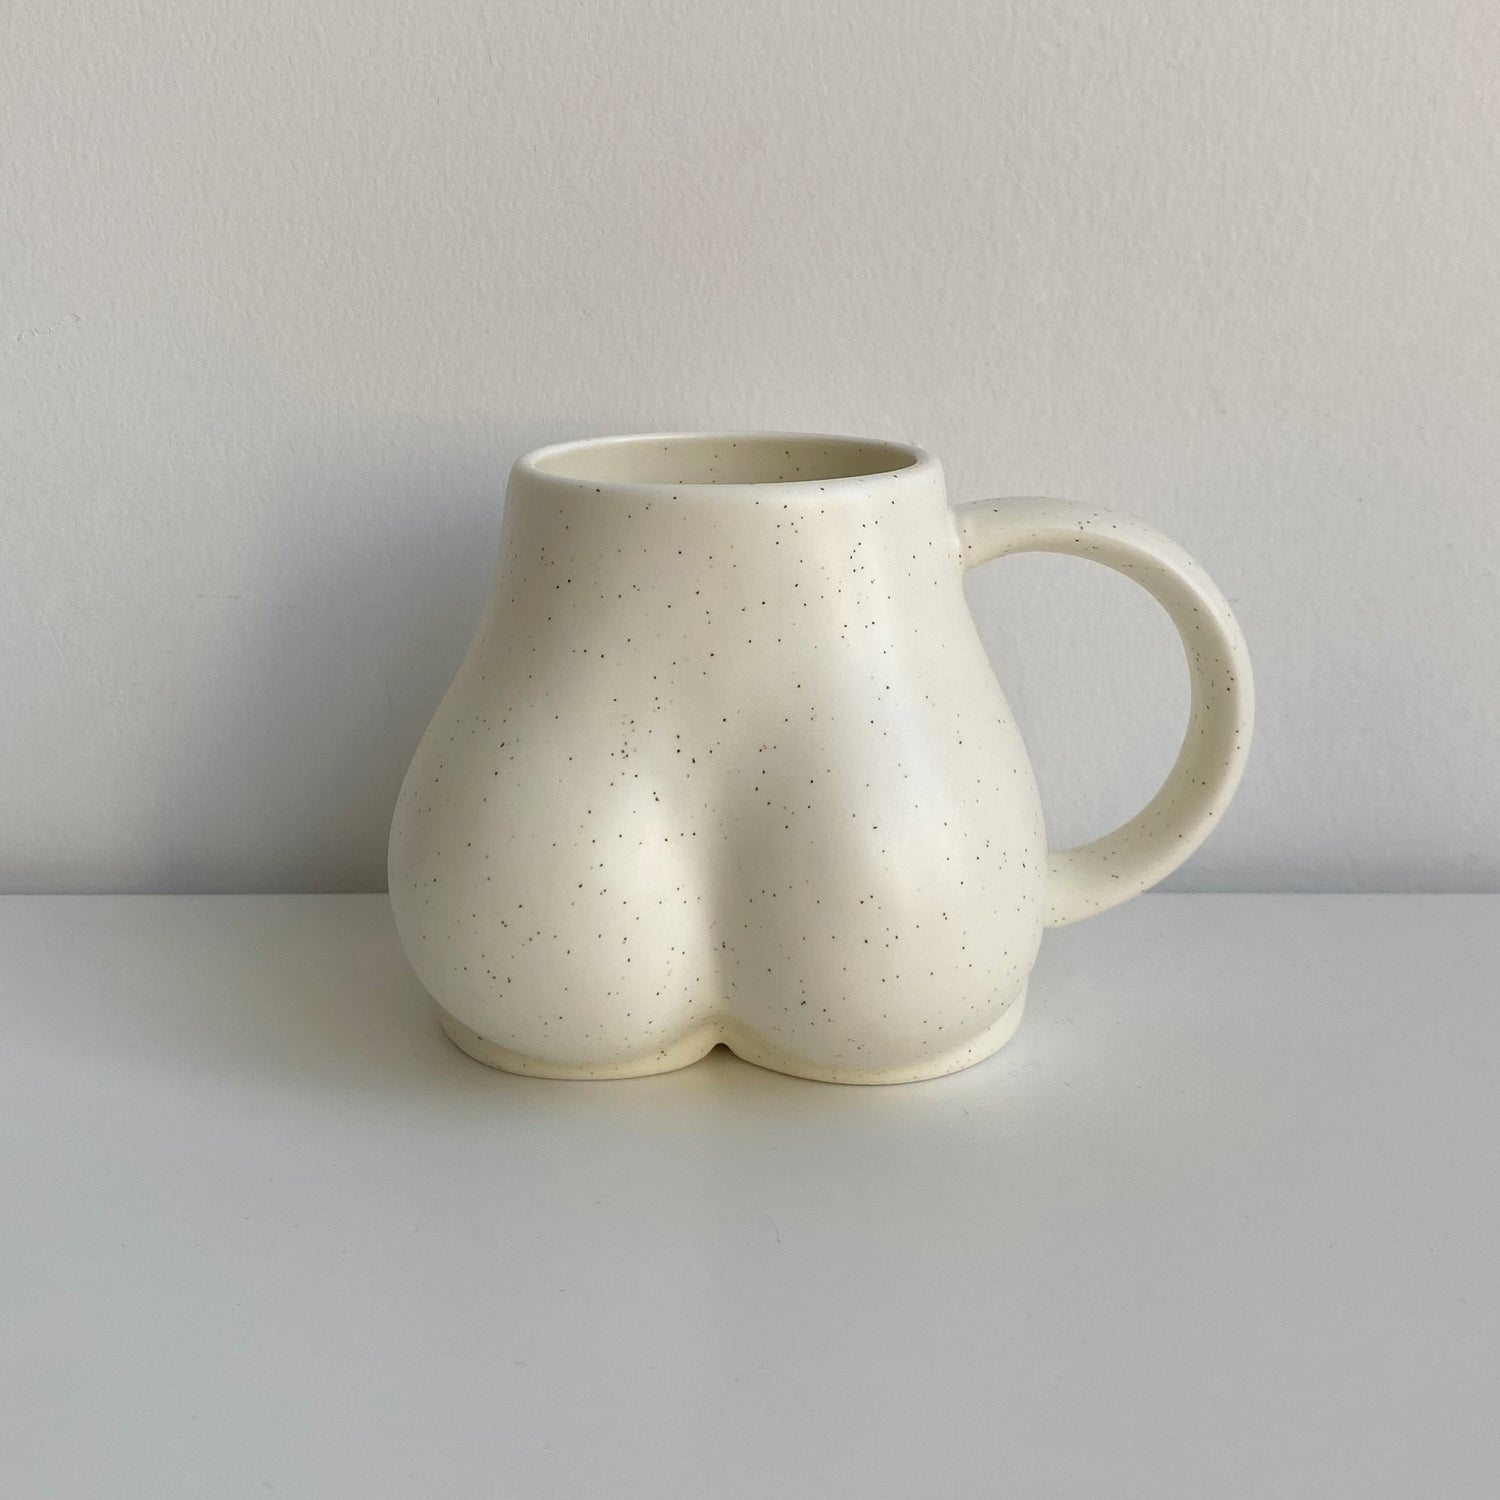 body figure ceramic mug back in cream